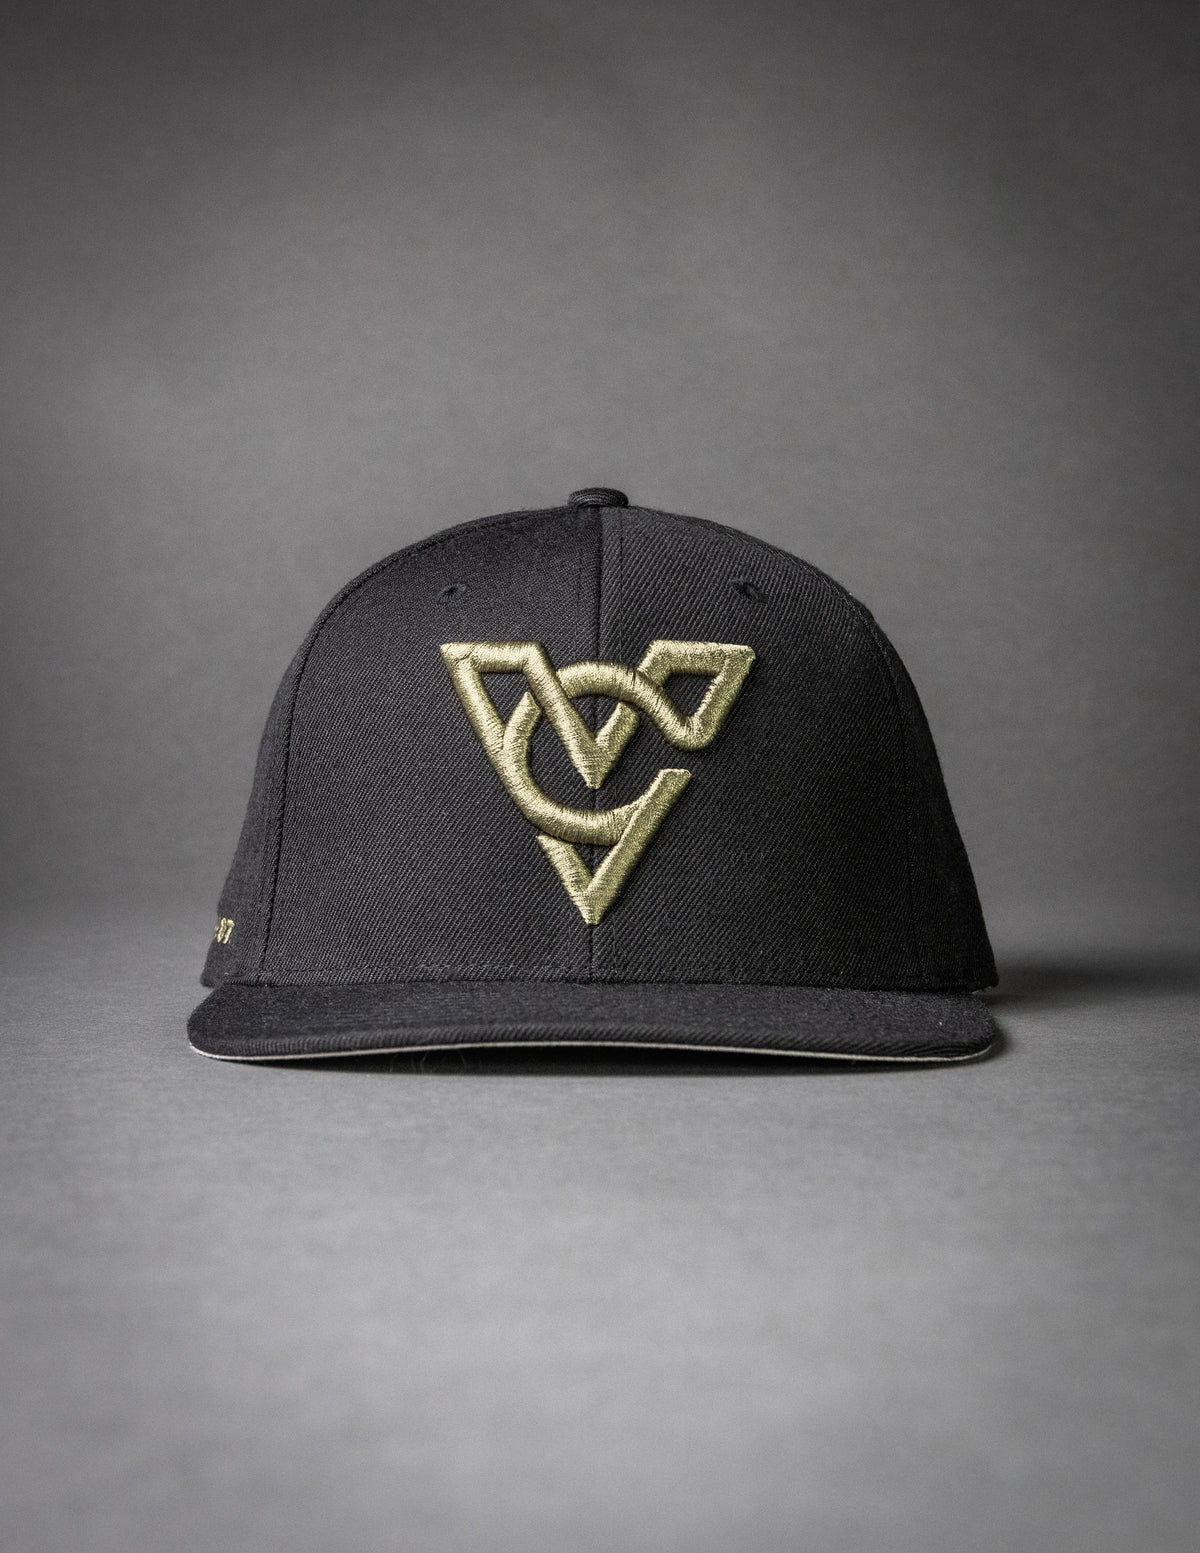 VC PUFF HAT (Black/Military Green Puff)